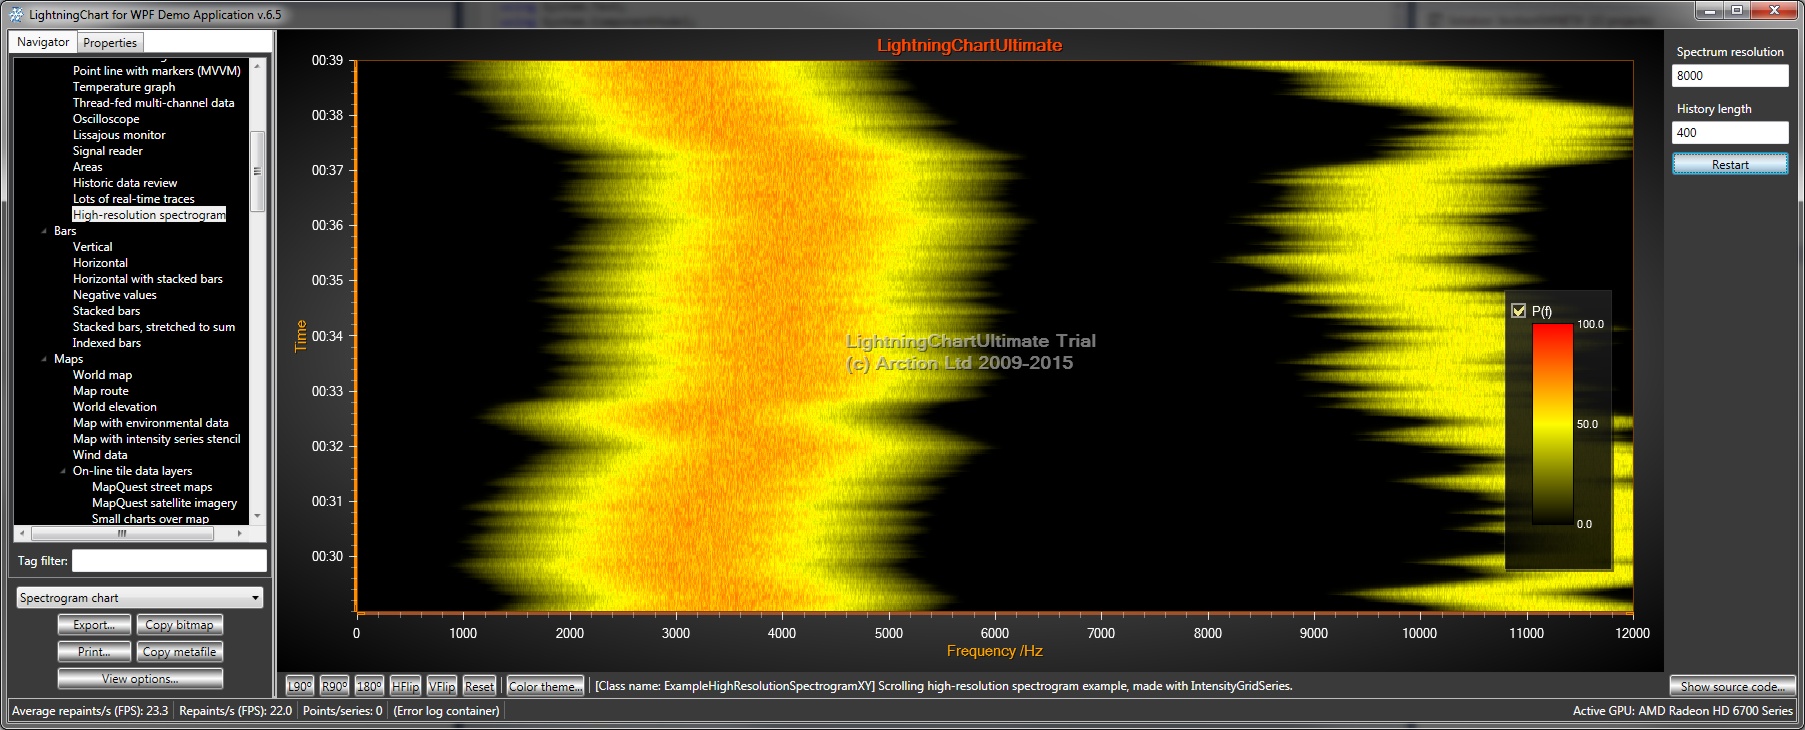 Hi-resolution spectrogram 8000x400